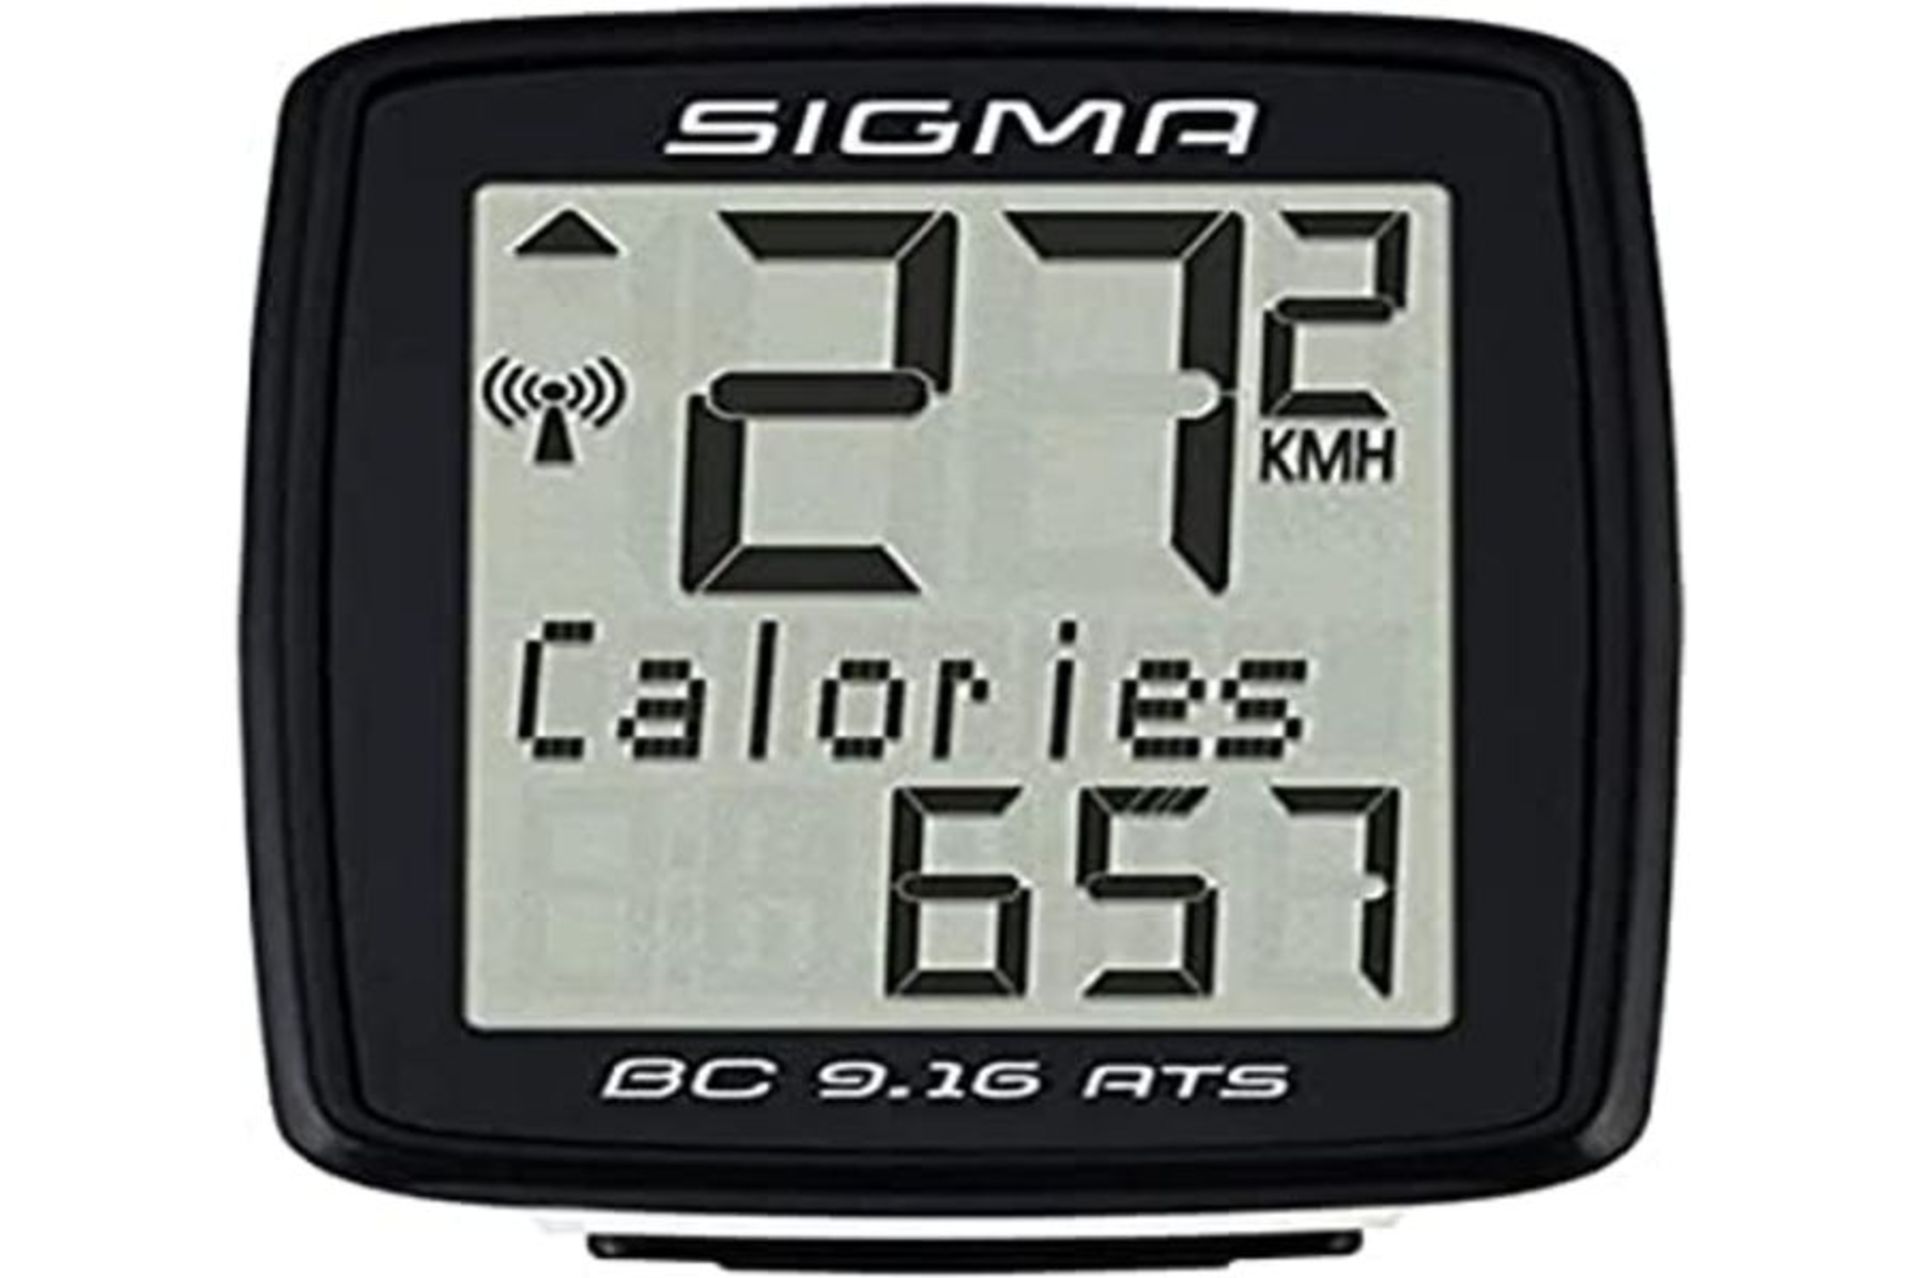 Sigma BC 9.16 ATS Unisex-Adult Wireless Bike Computer, Black, 3.5x7.8x11.3